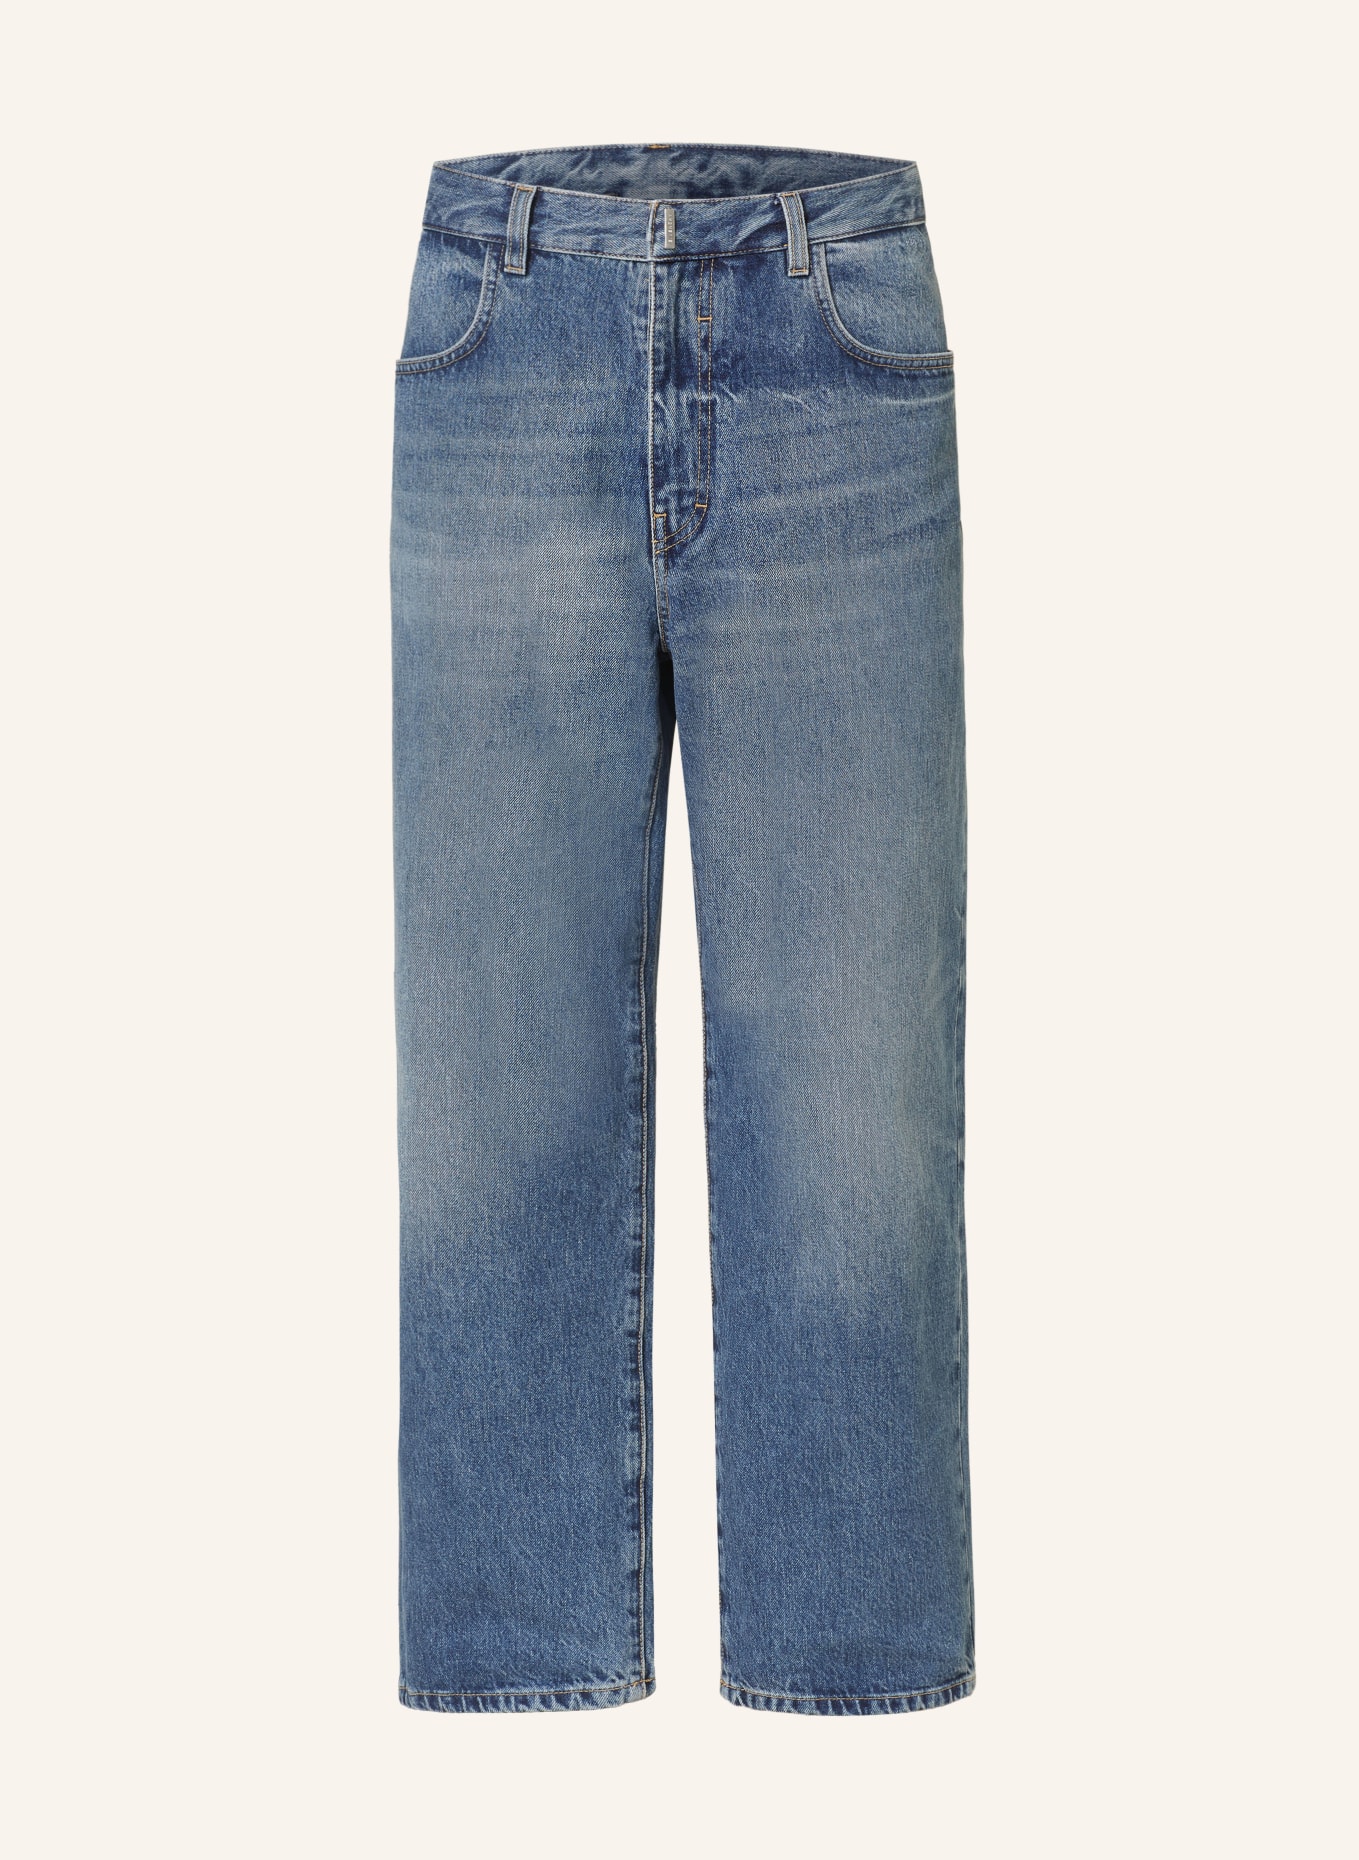 GIVENCHY Jeans Regular Fit, Farbe: 415 INDIGO BLUE (Bild 1)